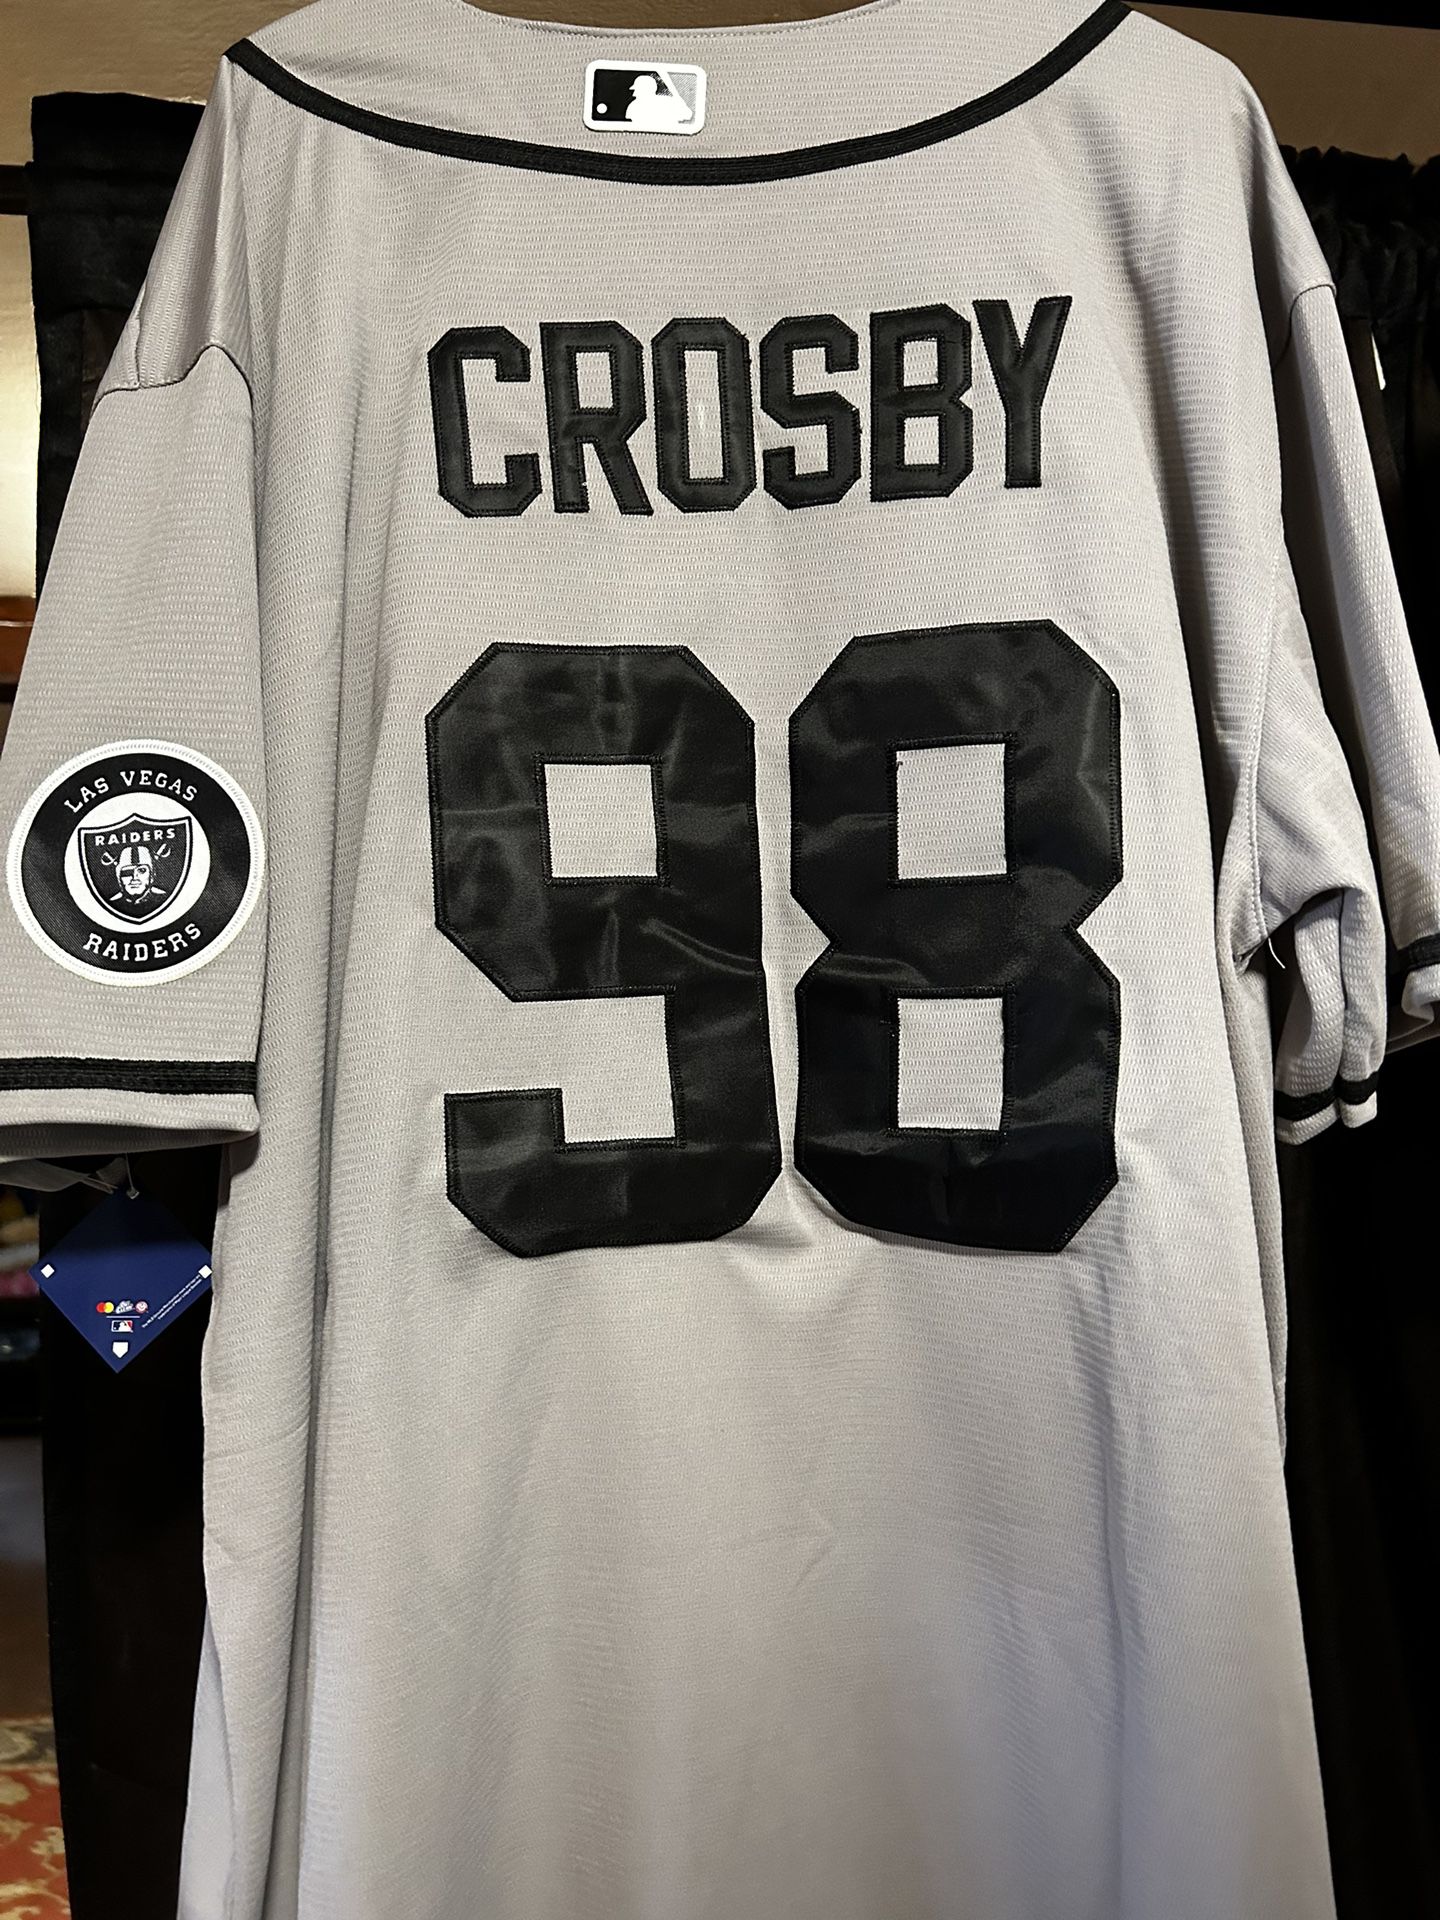 Raiders Crosby Jersey 